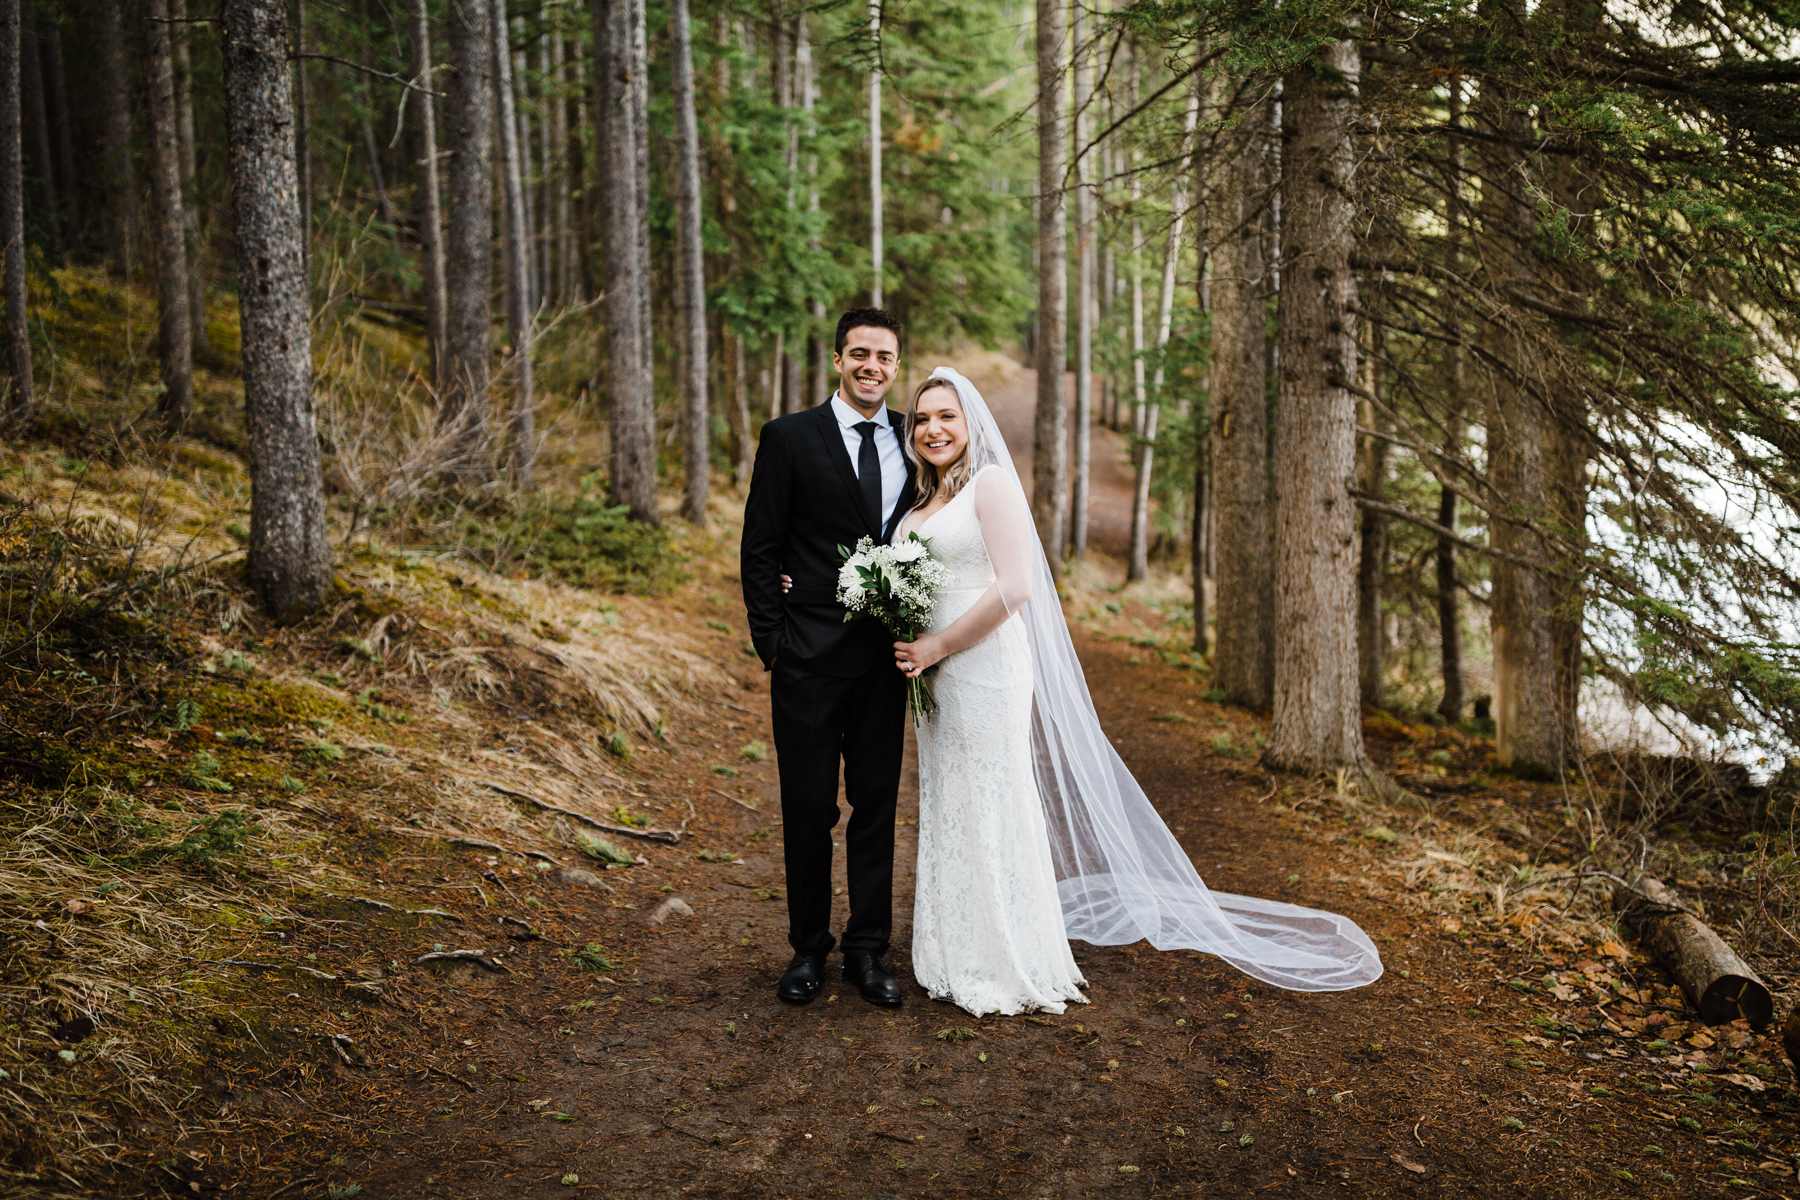 Banff Adventure Wedding Photographers for Lake Minnewanka Elopement - Image 14